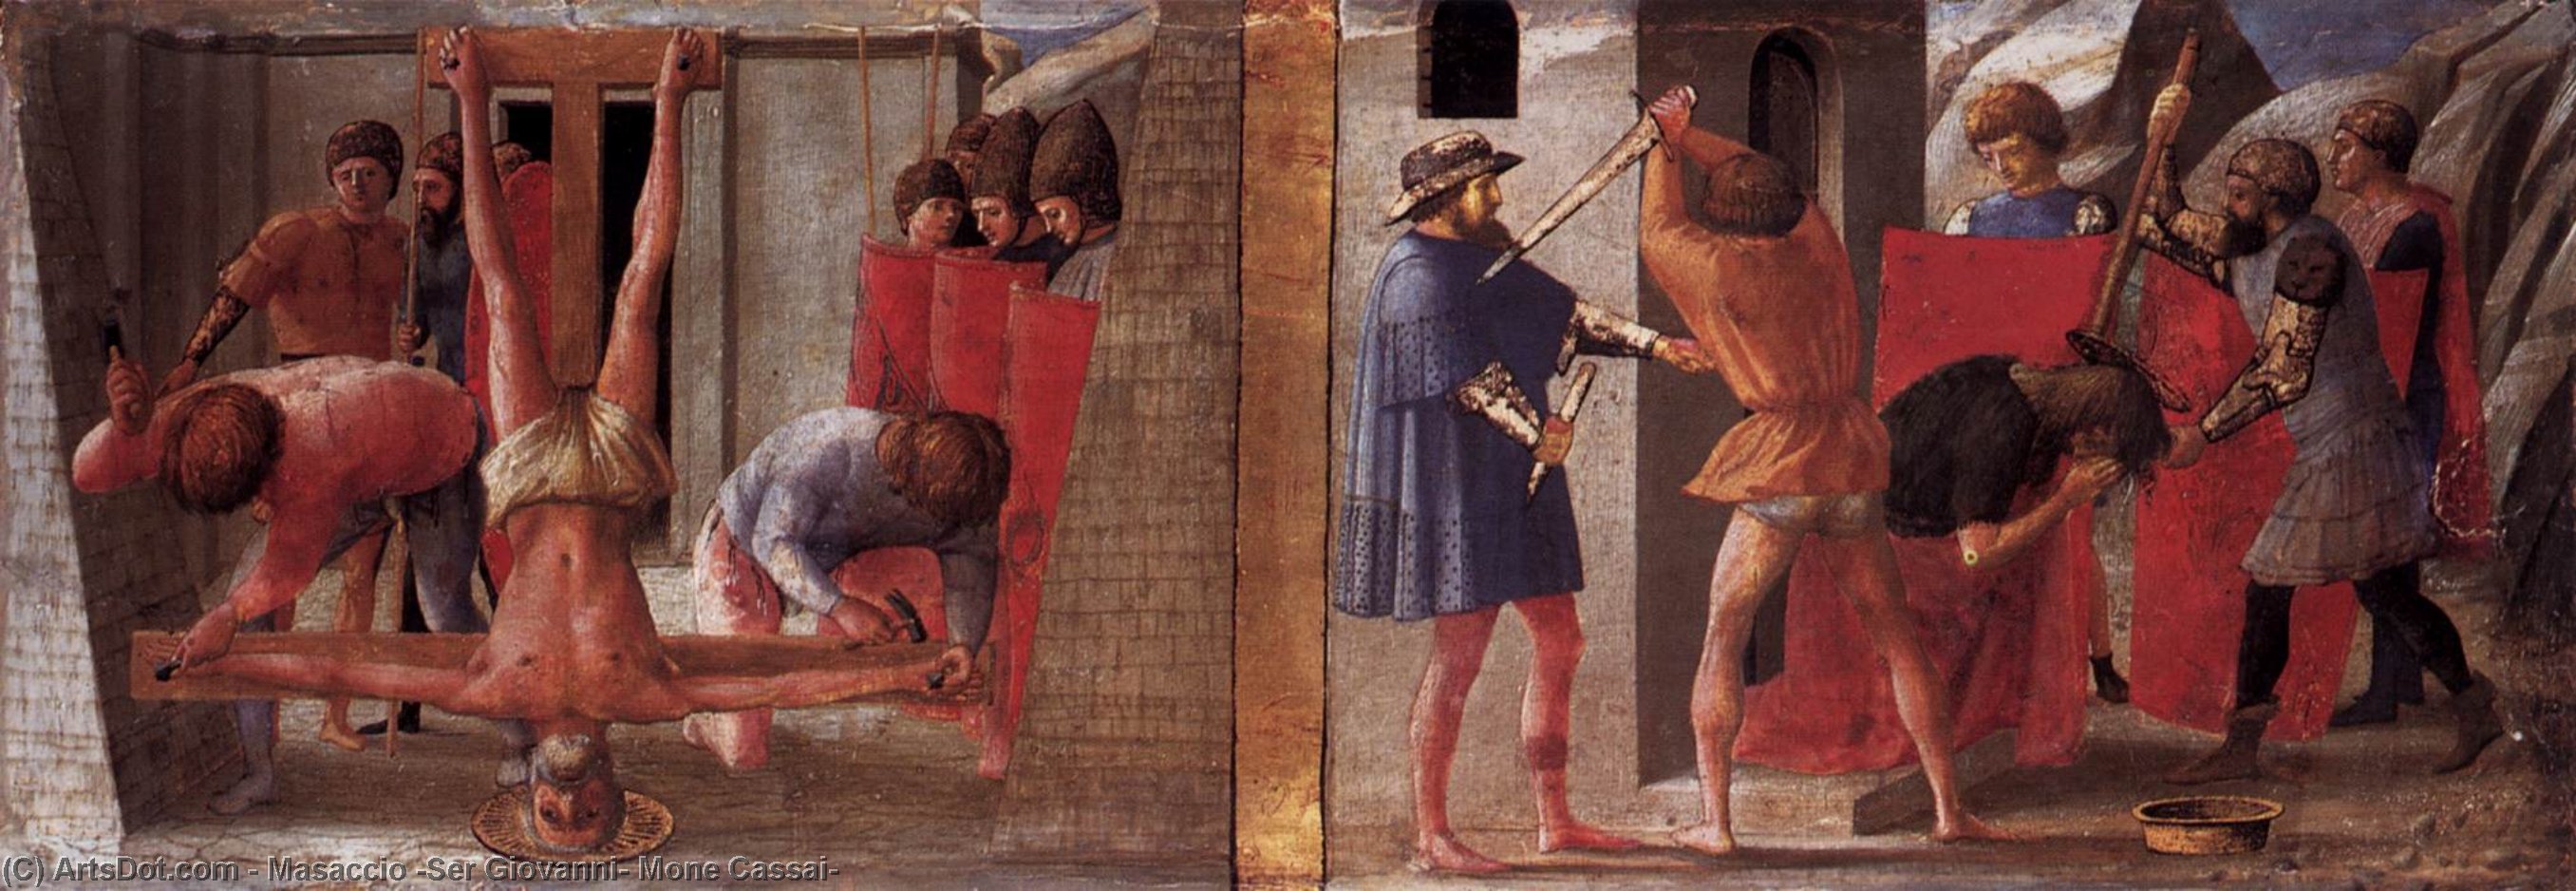 WikiOO.org - Енциклопедия за изящни изкуства - Живопис, Произведения на изкуството Masaccio (Ser Giovanni, Mone Cassai) - Predella panel from the Pisa Altar